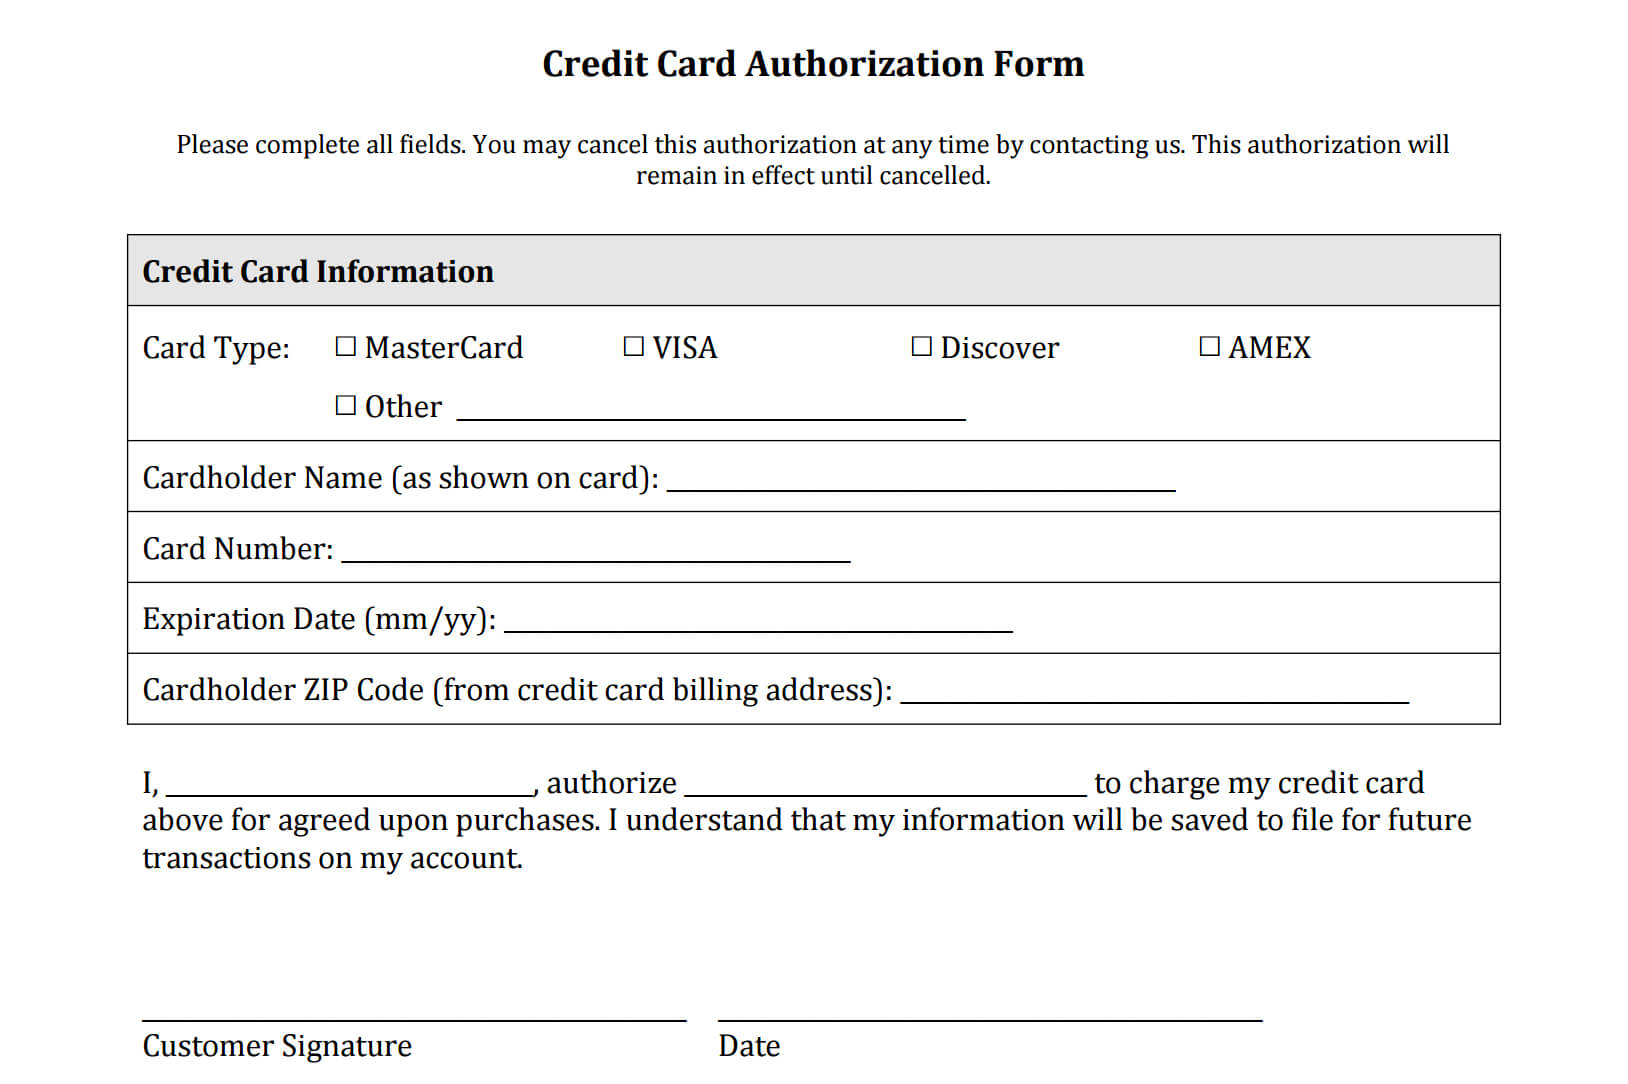 Credit Card Authorisation Form Template Australia - Calep With Credit Card Authorisation Form Template Australia